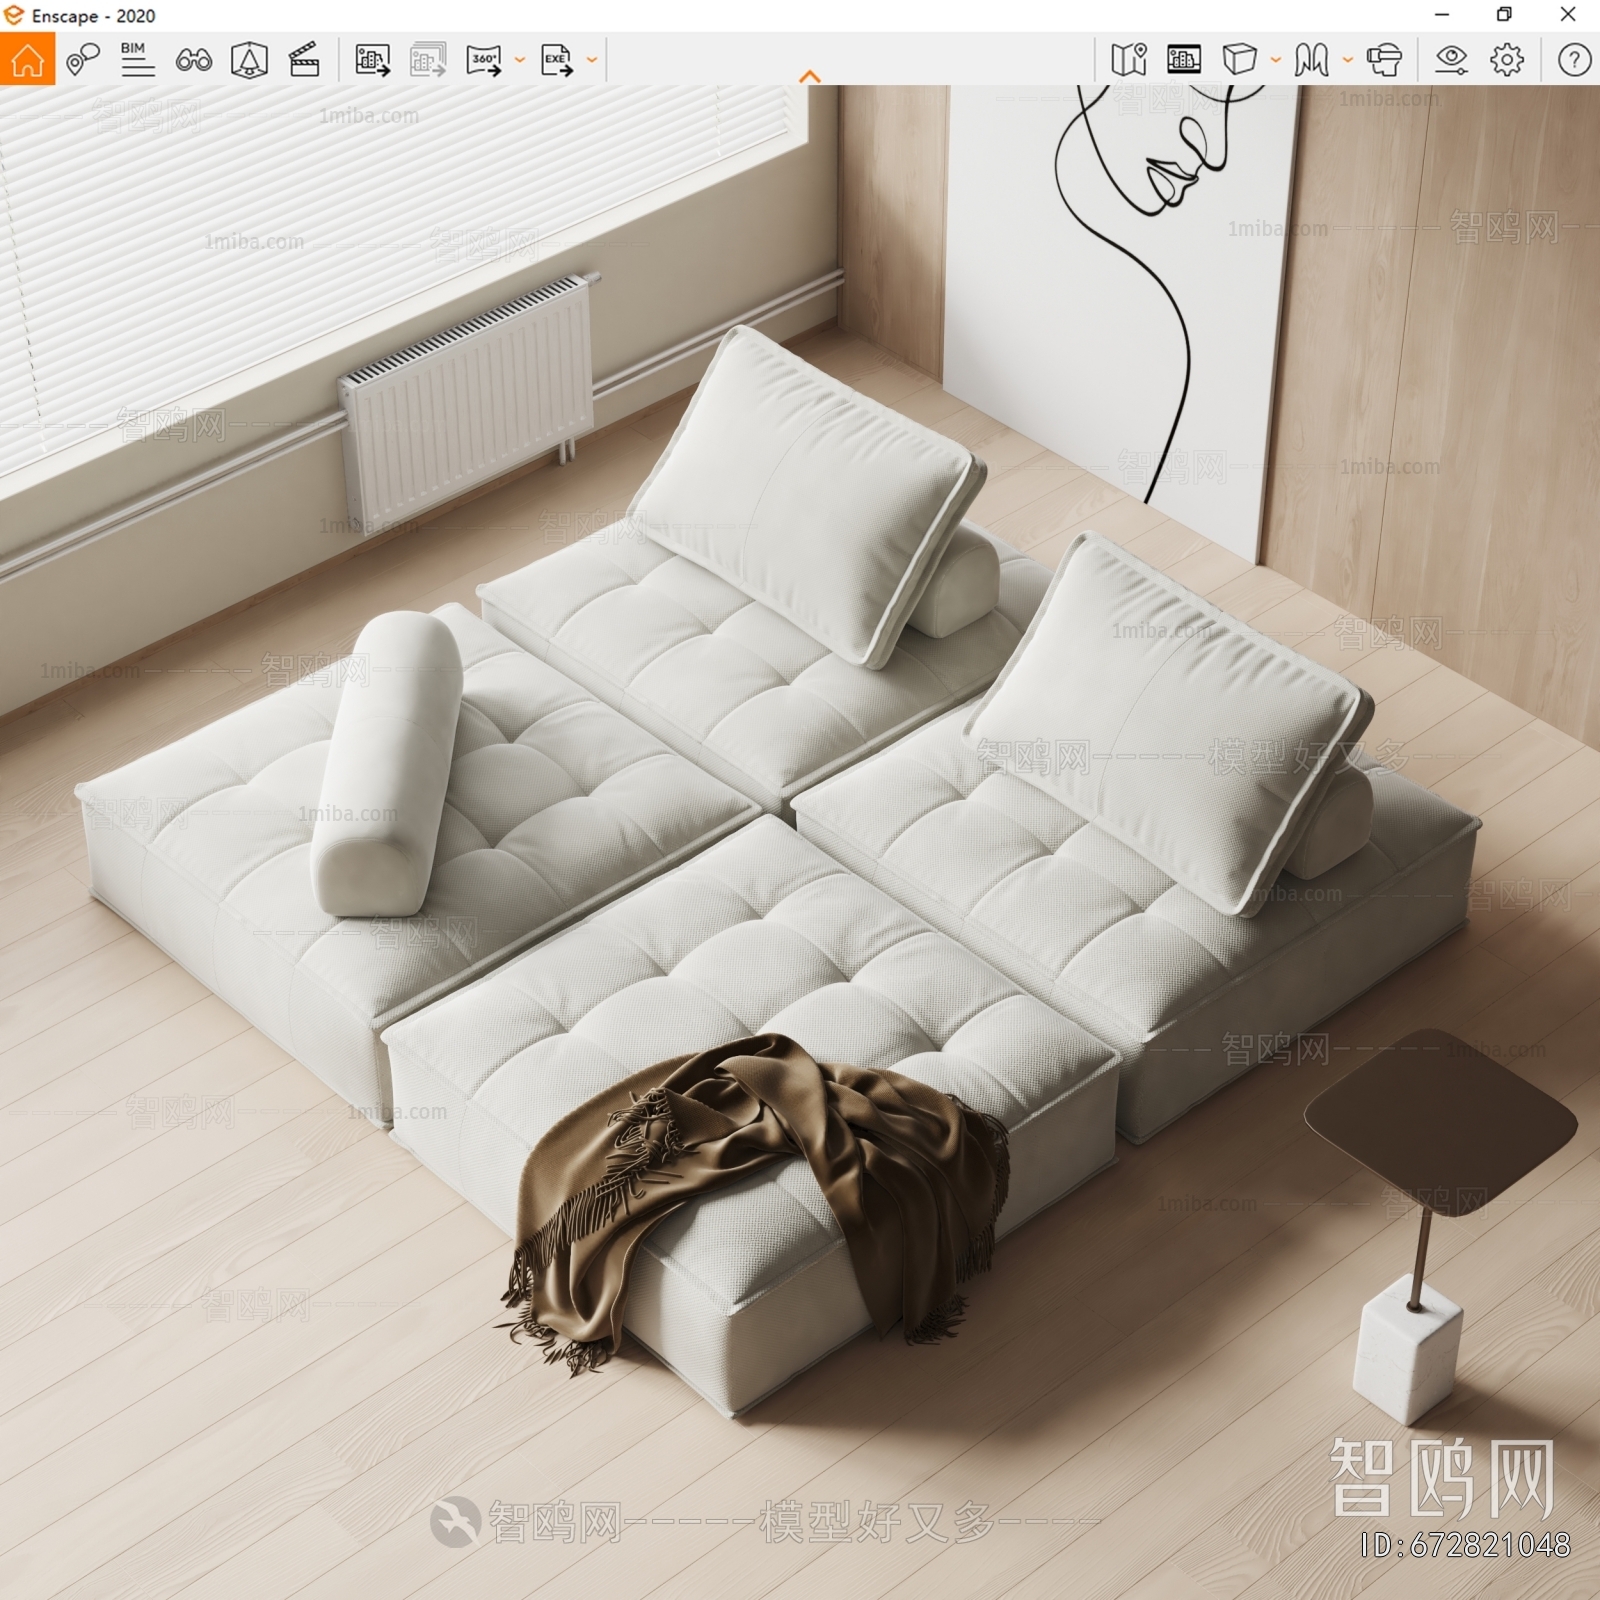 Poliform 现代豆腐块多人沙发3D模型下载